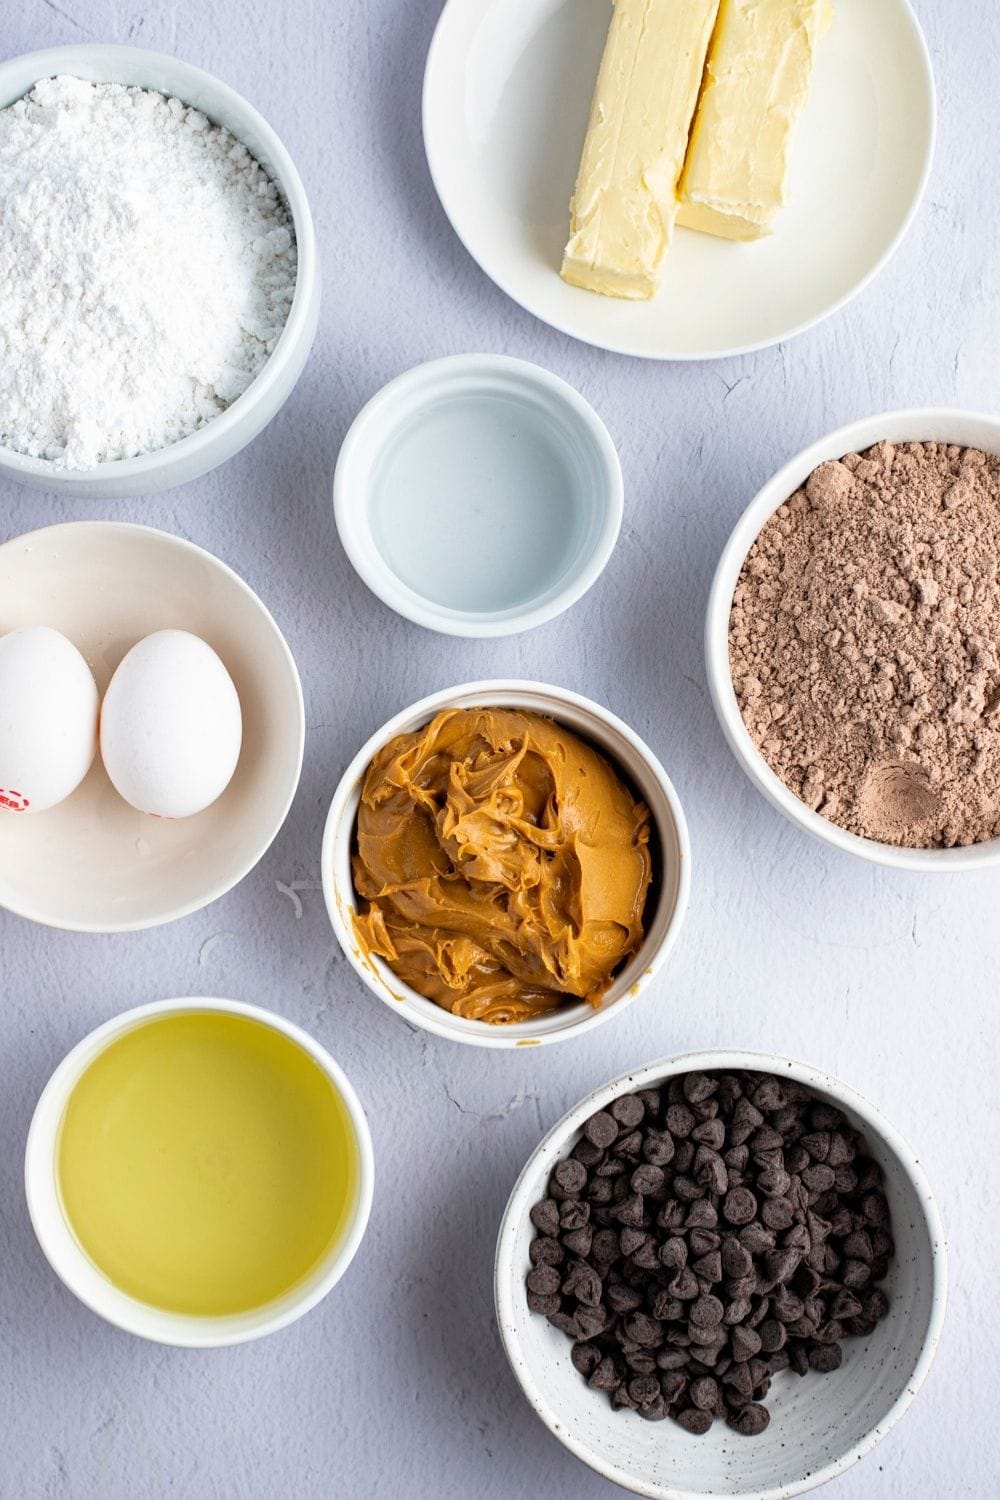 Buckeye Brownie Ingredients: Chocolate Chips, Peanut Butter, Eggs, Sugar and Brownie Mix